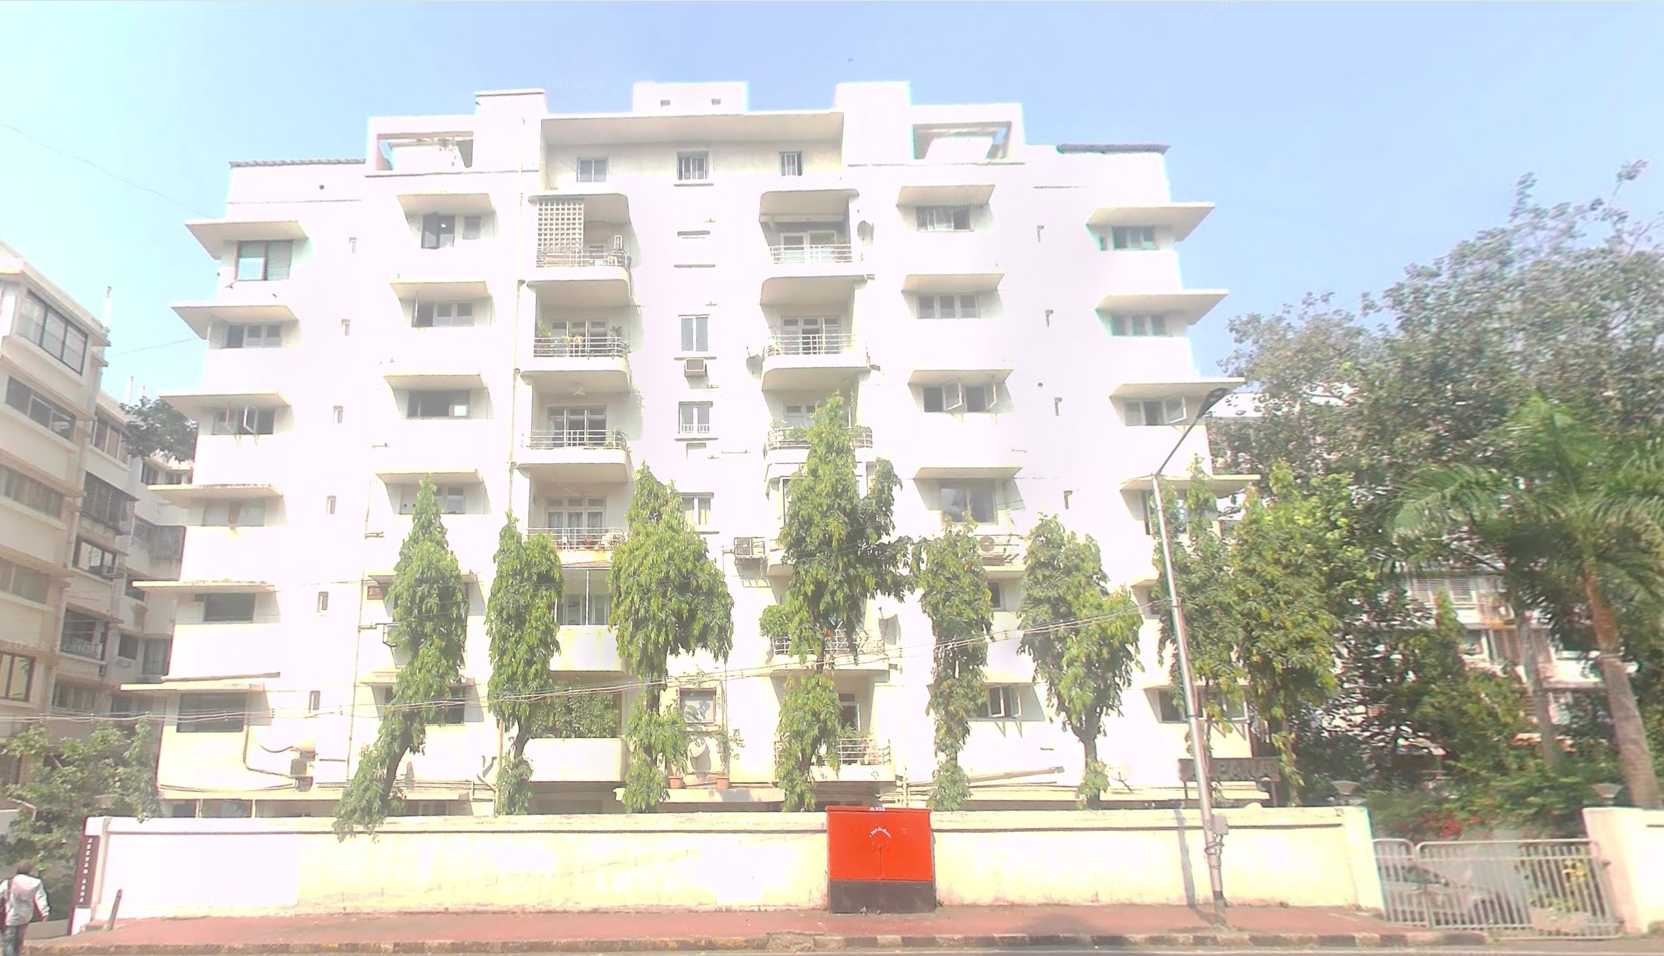 2 BHK Flat on Rent in Peddar Road - Jeevan Asha